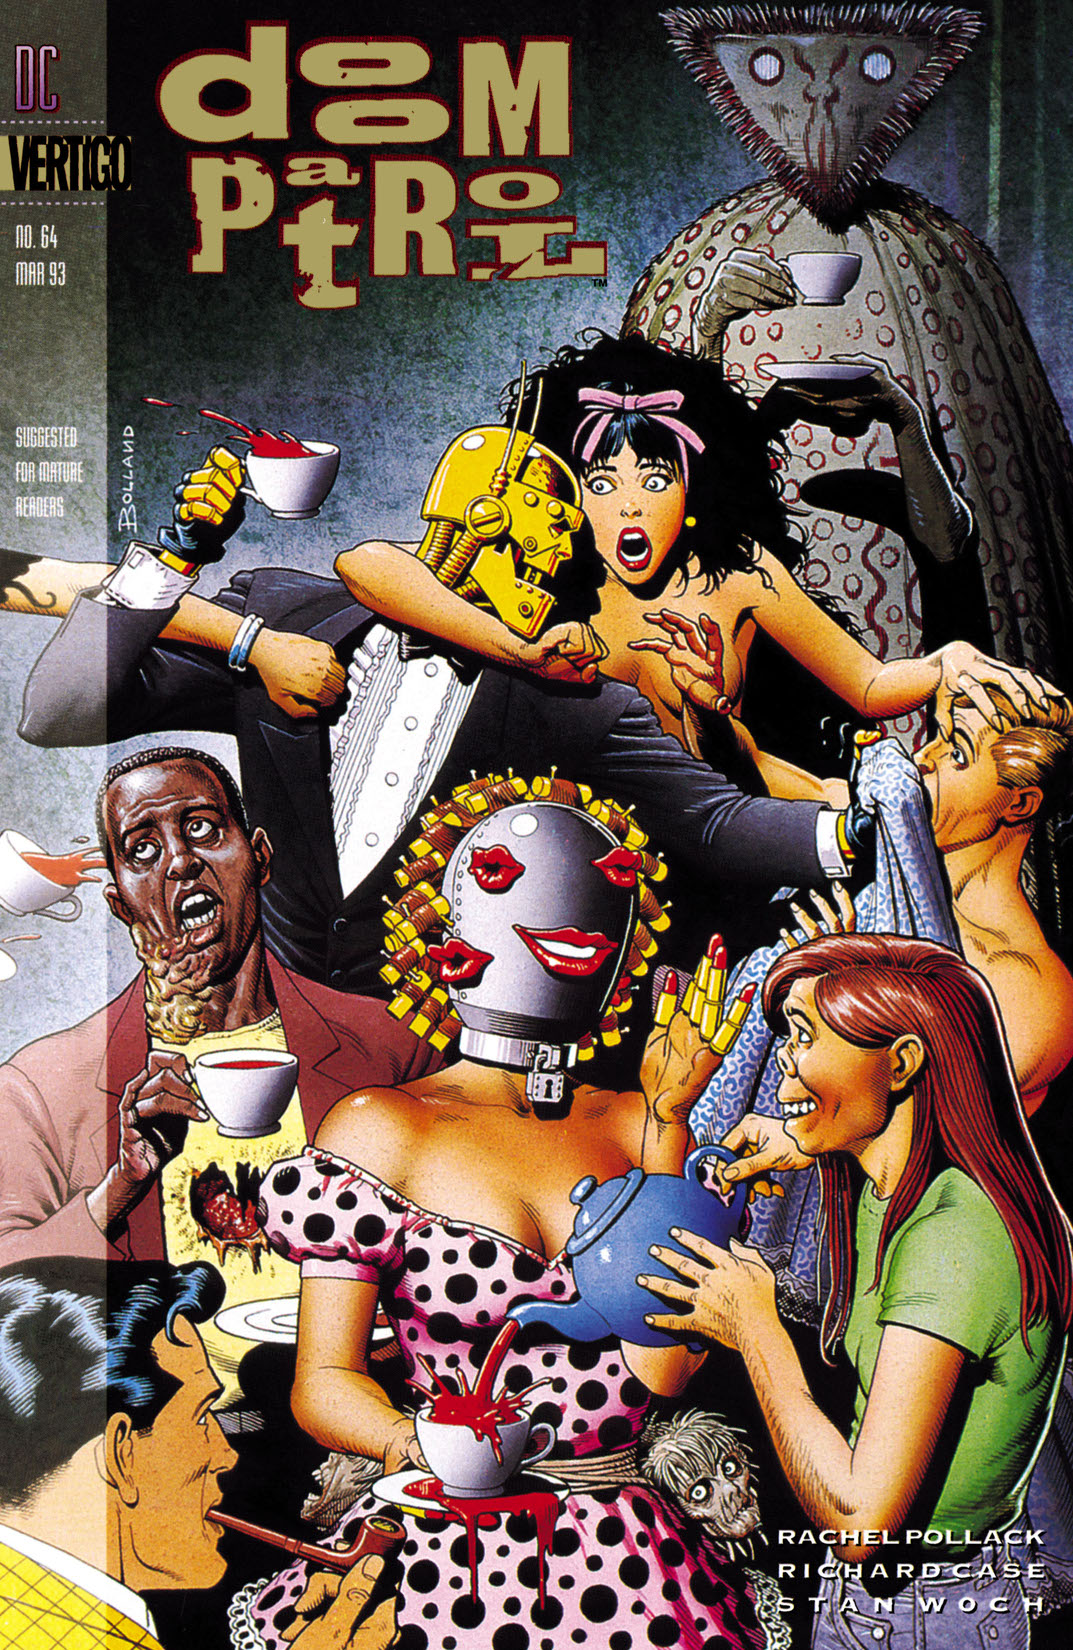 Doom Patrol (1987-) #64 preview images